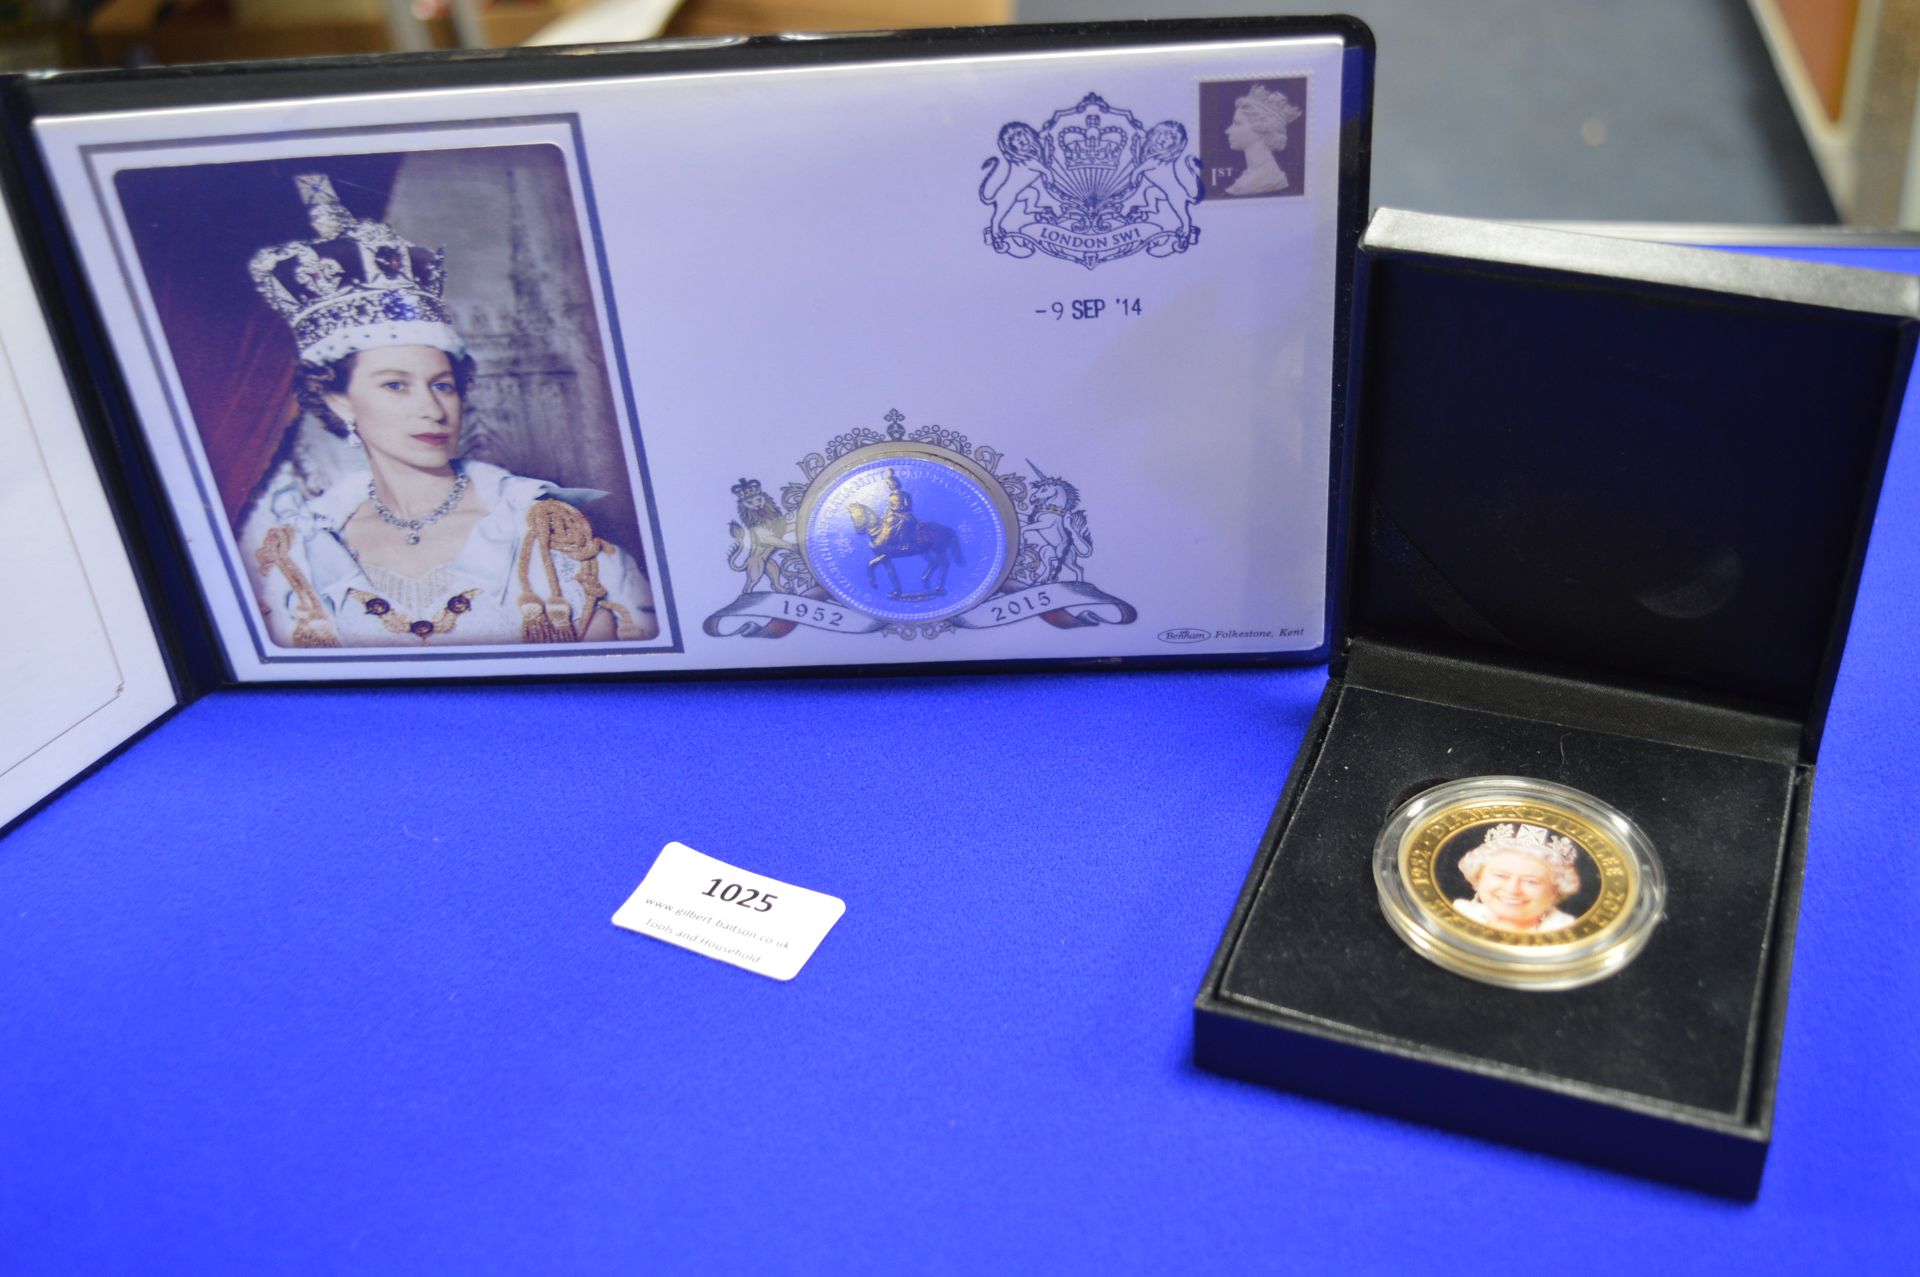 Queen Elizabeth II 1953 Crown Commemorative Cover plus 60 Year Diamond Jubilee Crown